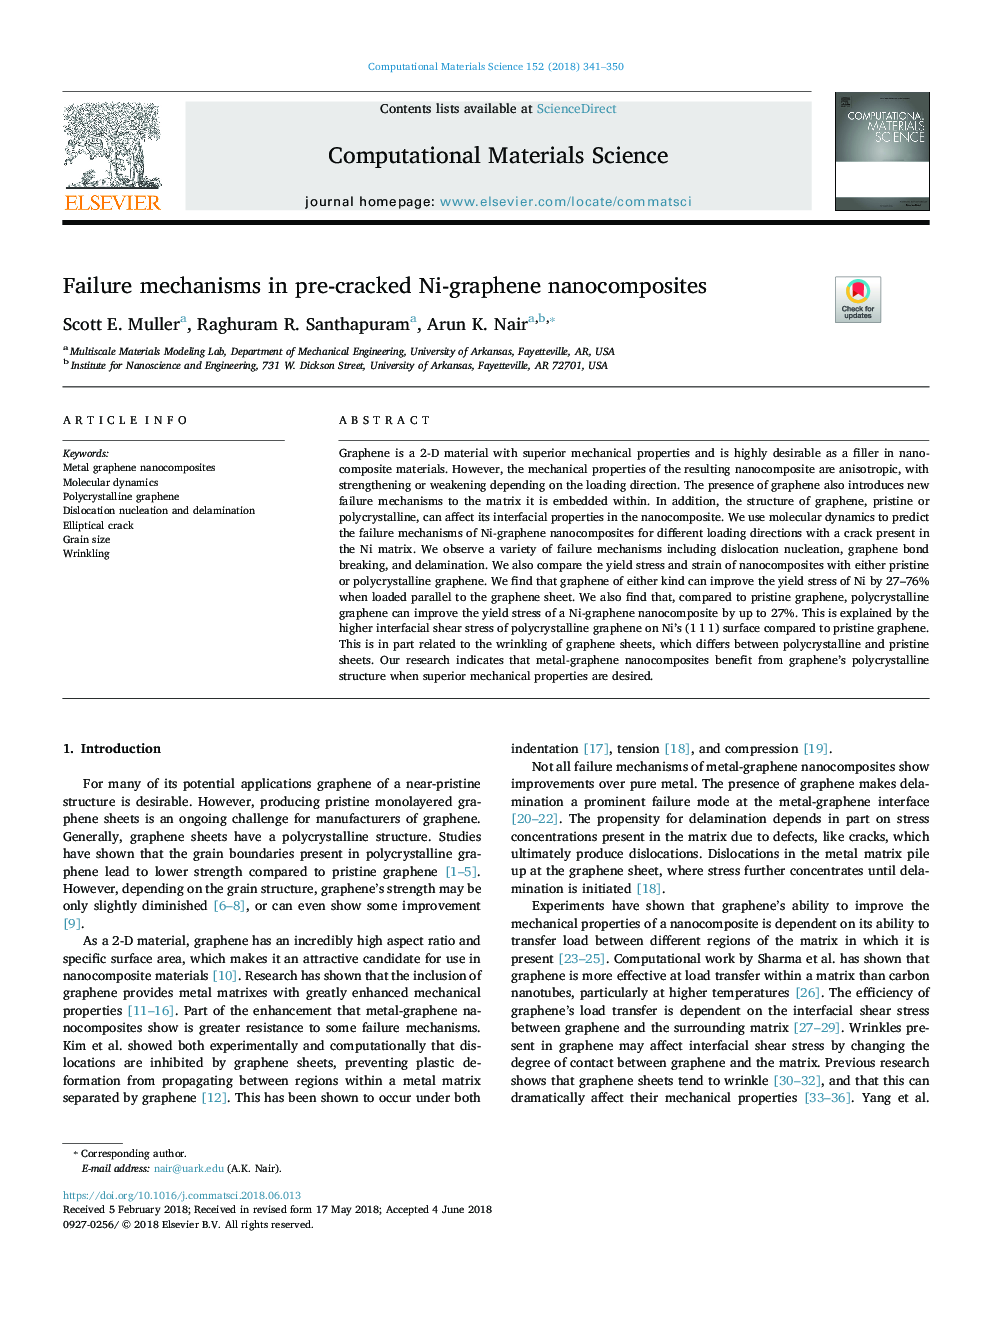 Failure mechanisms in pre-cracked Ni-graphene nanocomposites